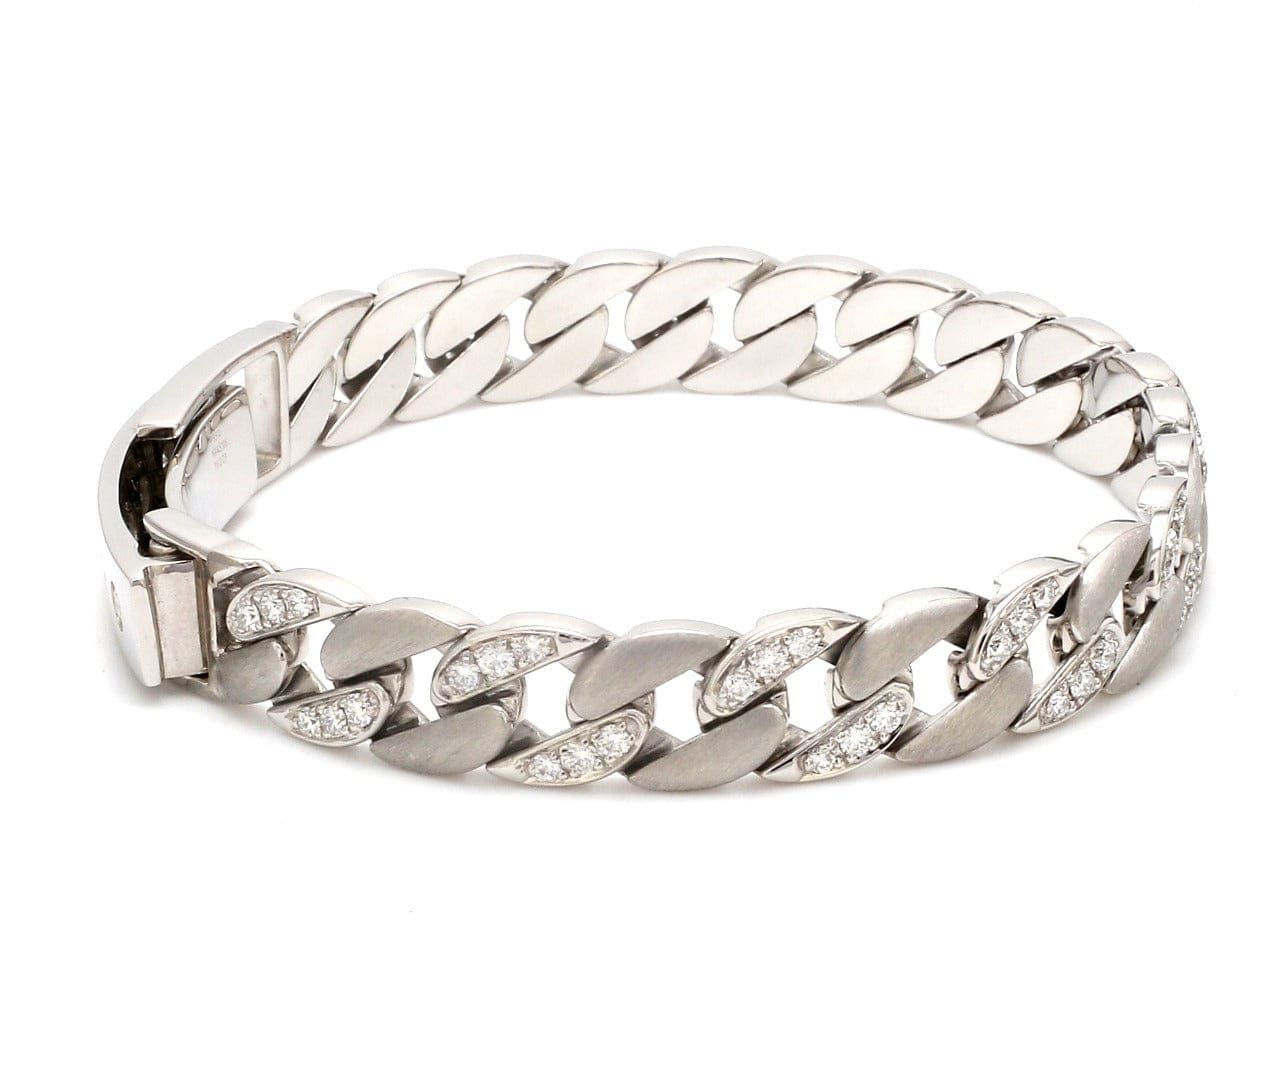 Discover more than 72 unusual diamond bracelets latest